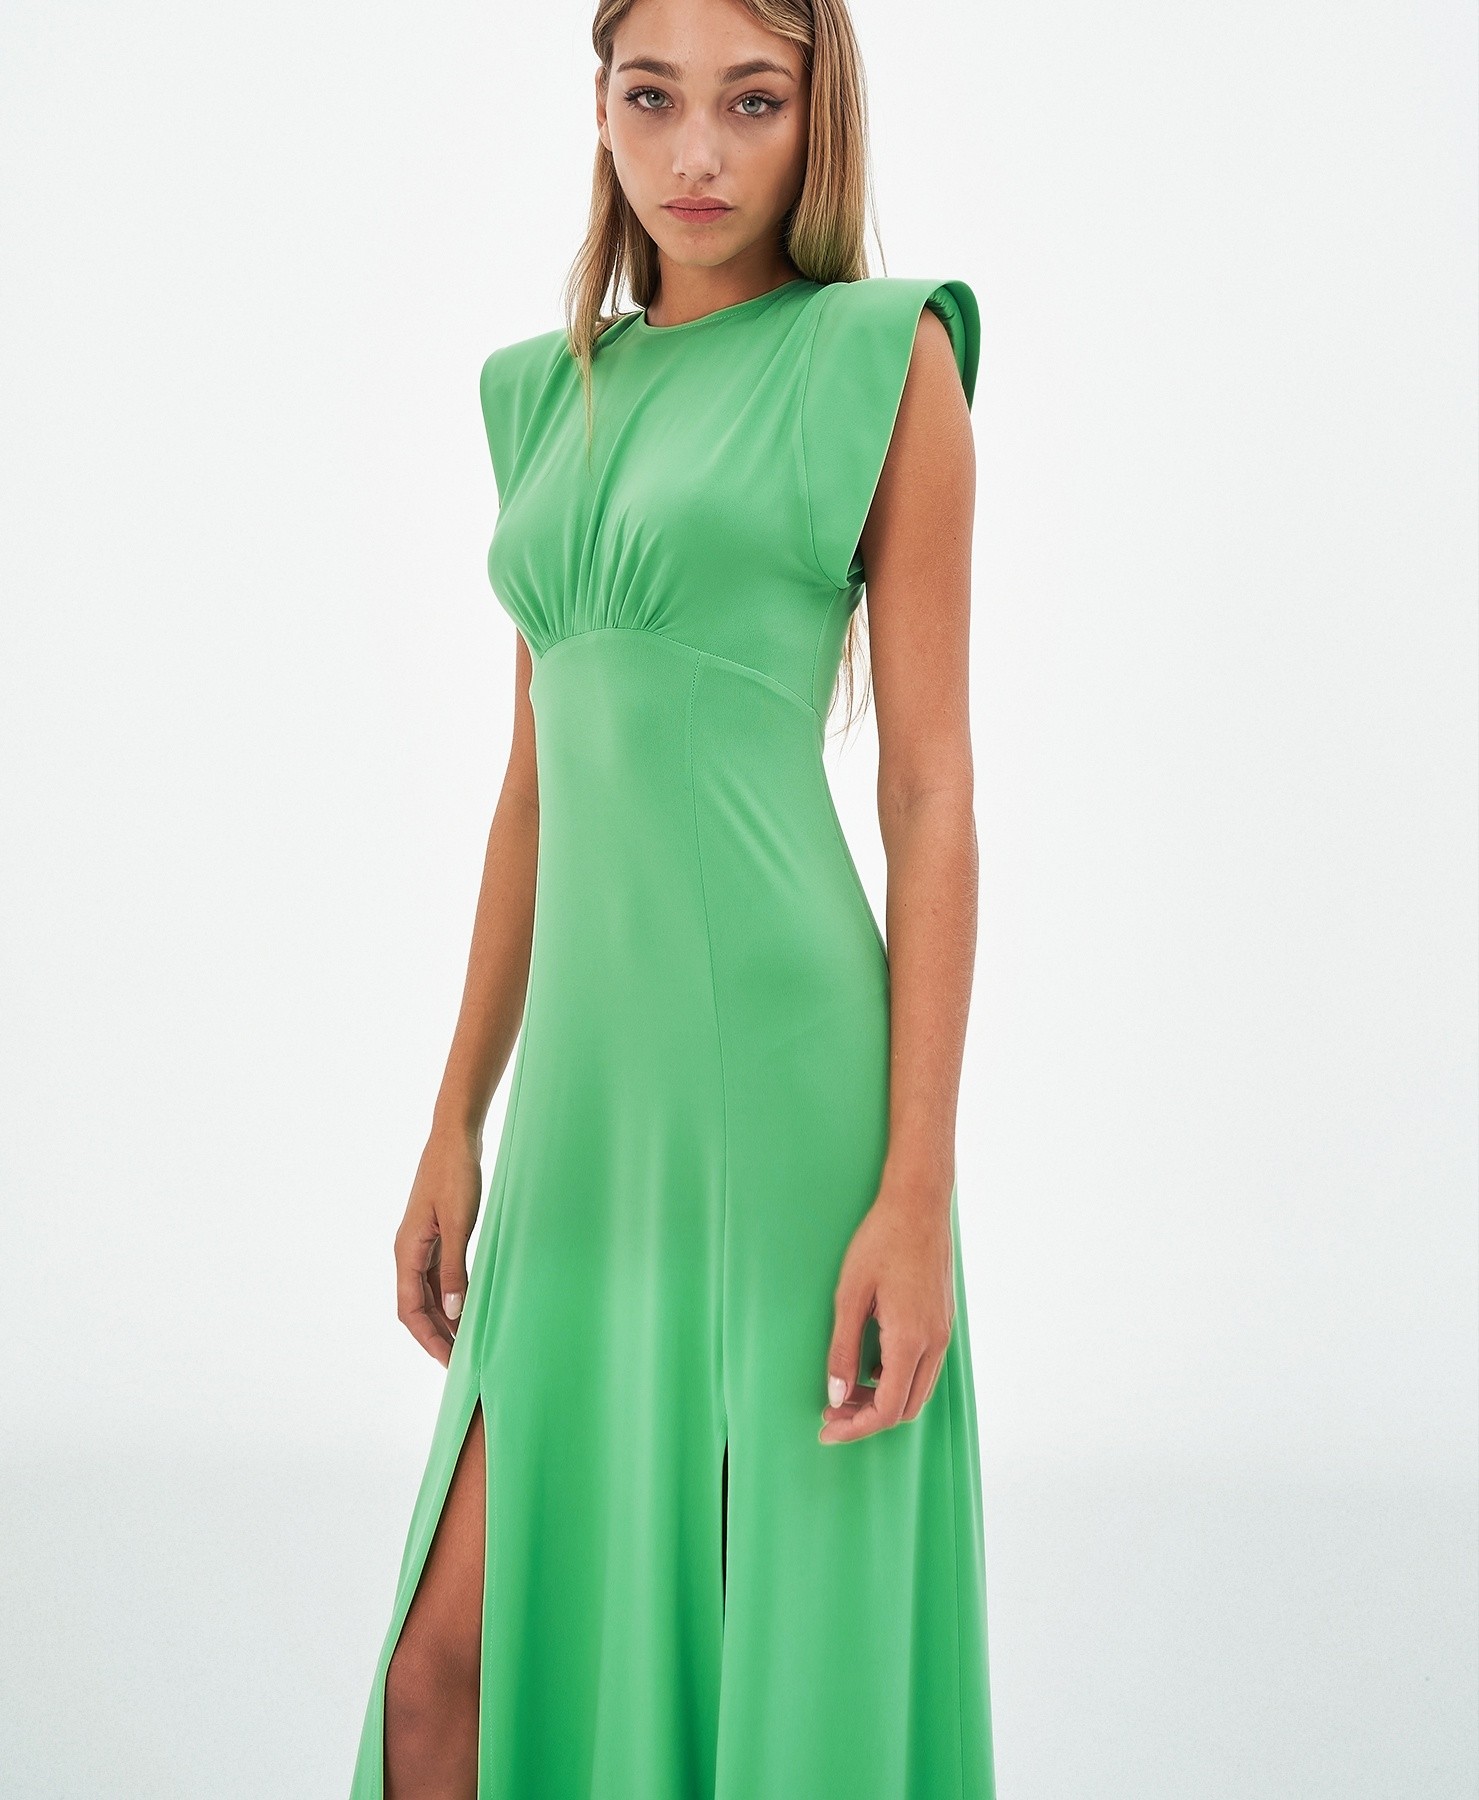 Epilota Green Dress